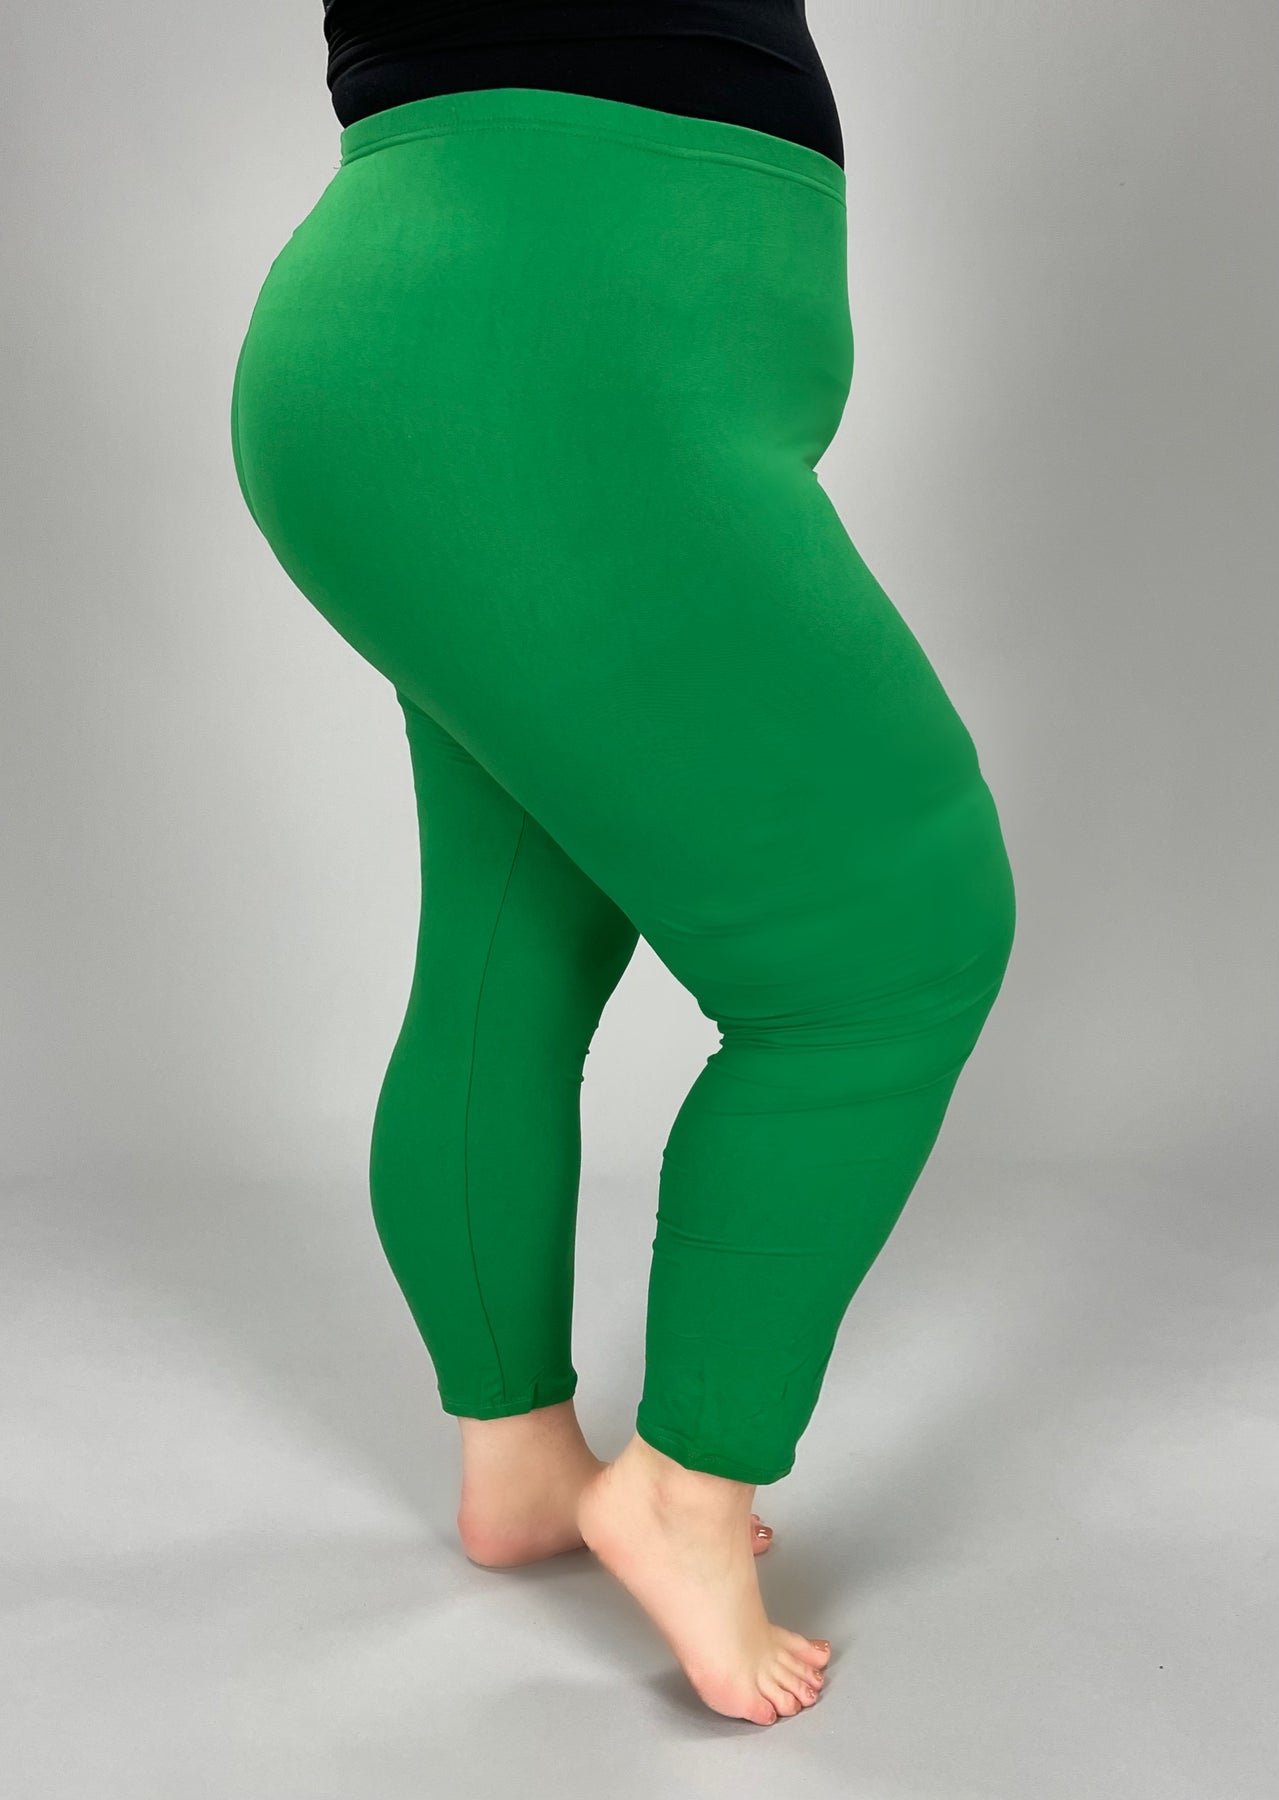 Neon Green UV 50+ Lime Lucy Performance Leggings Yoga Pants - Women -  Pineapple Clothing